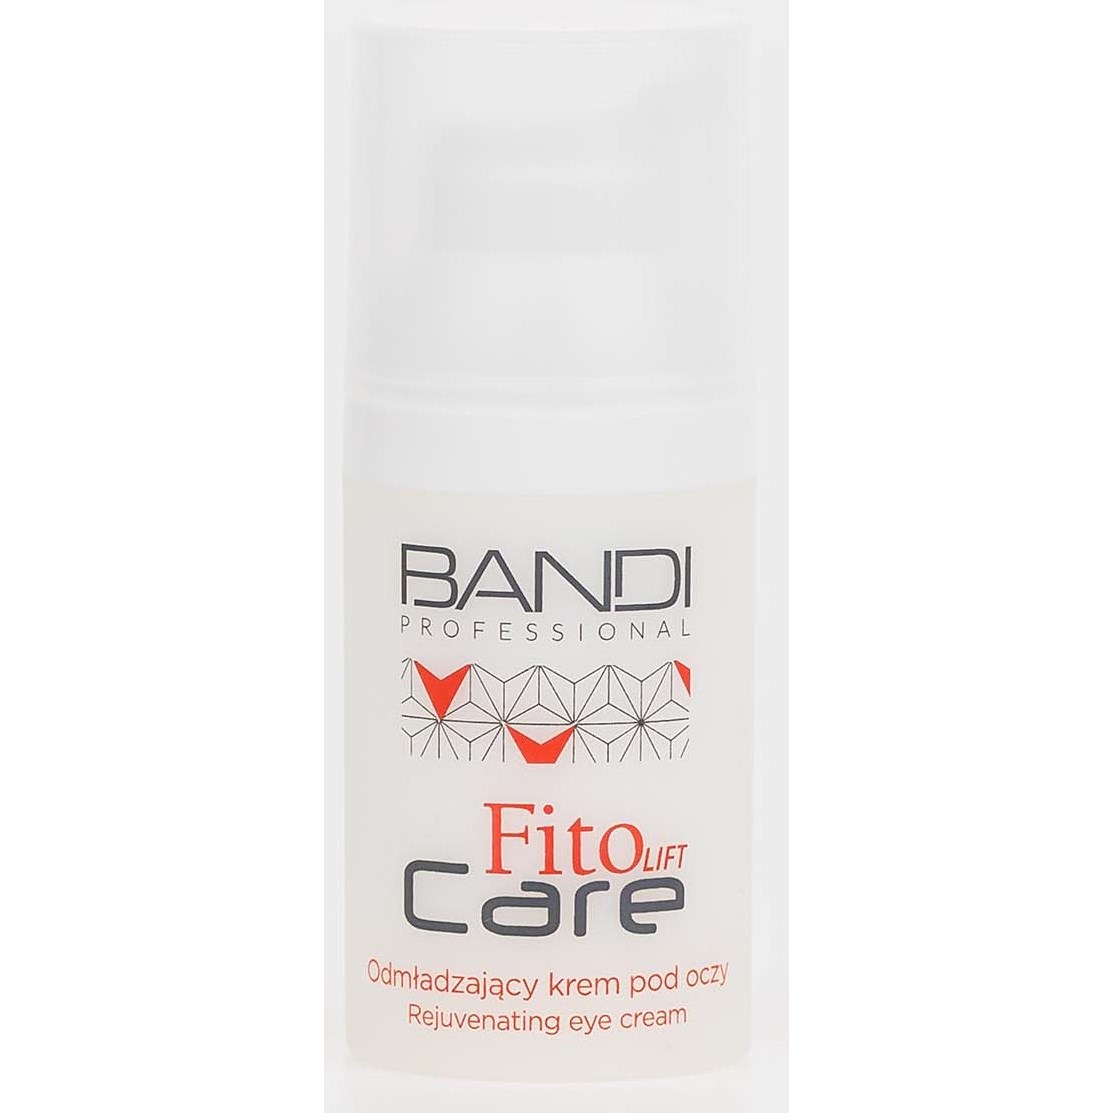 Bandi Fito Lift Care Rejuvenating eye cream 50 ml